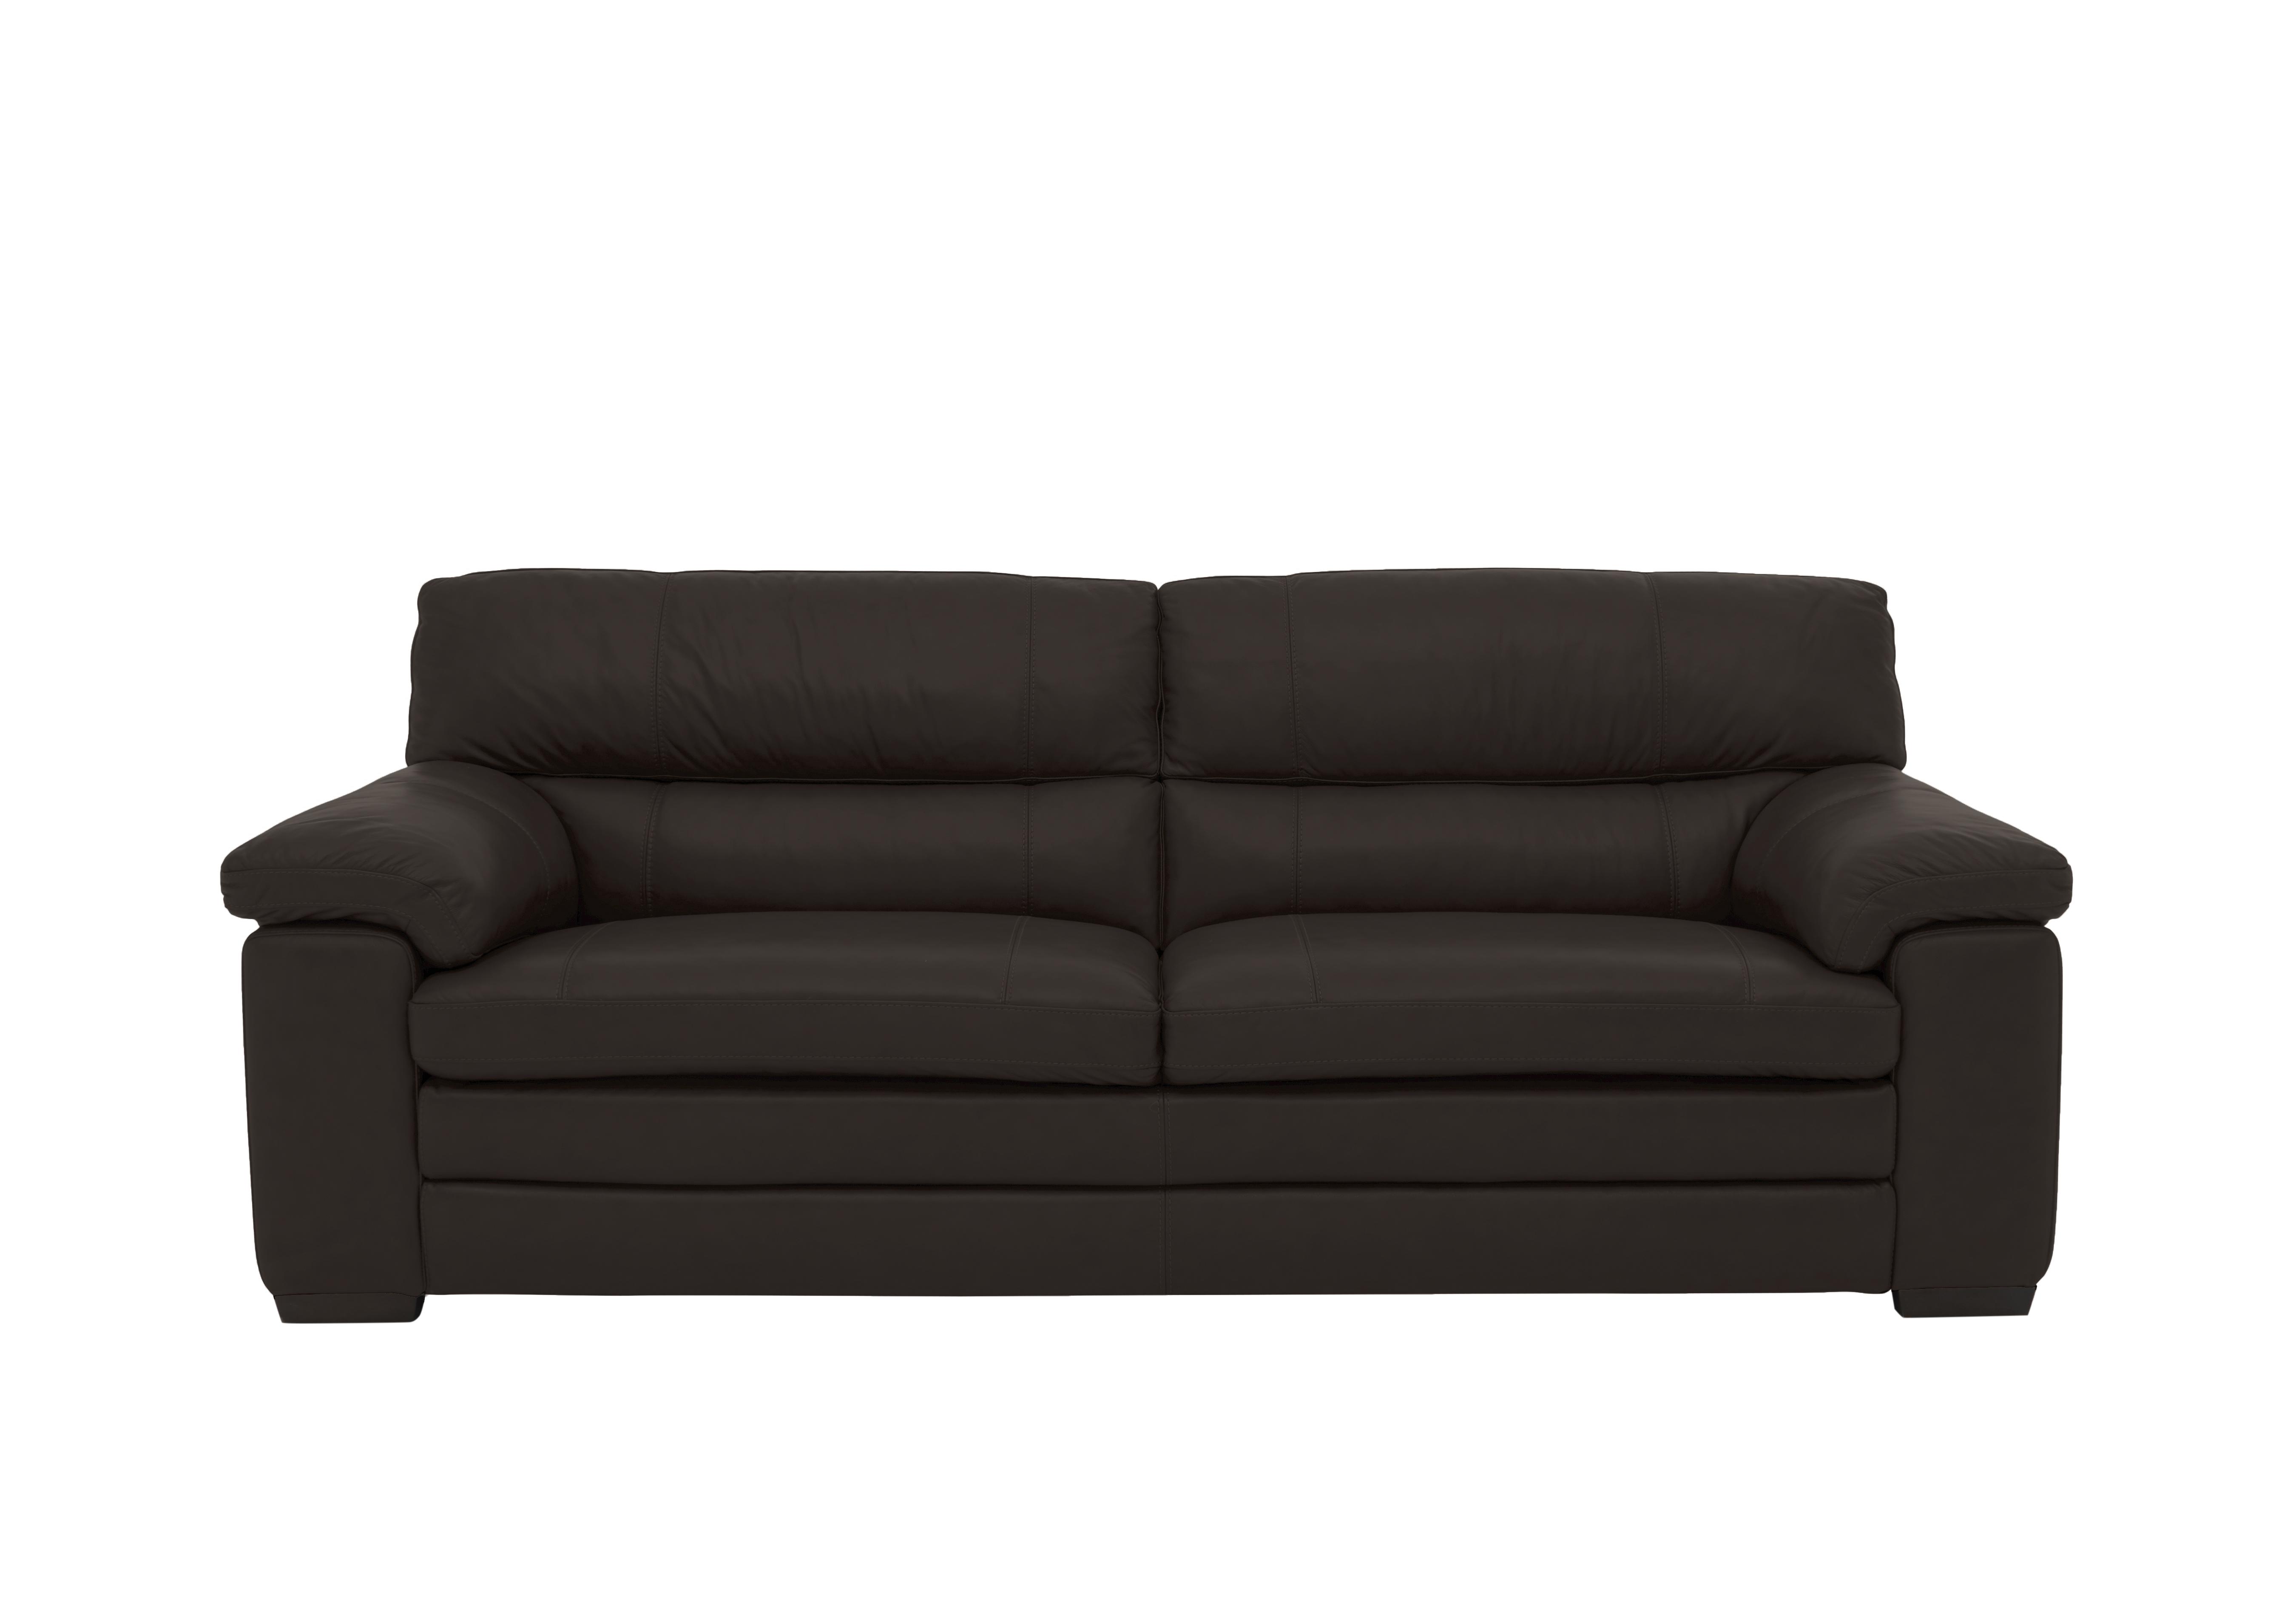 Cozee 3 Seater Pure Premium Leather Sofa in Bv-1748 Dark Chocolate on Furniture Village